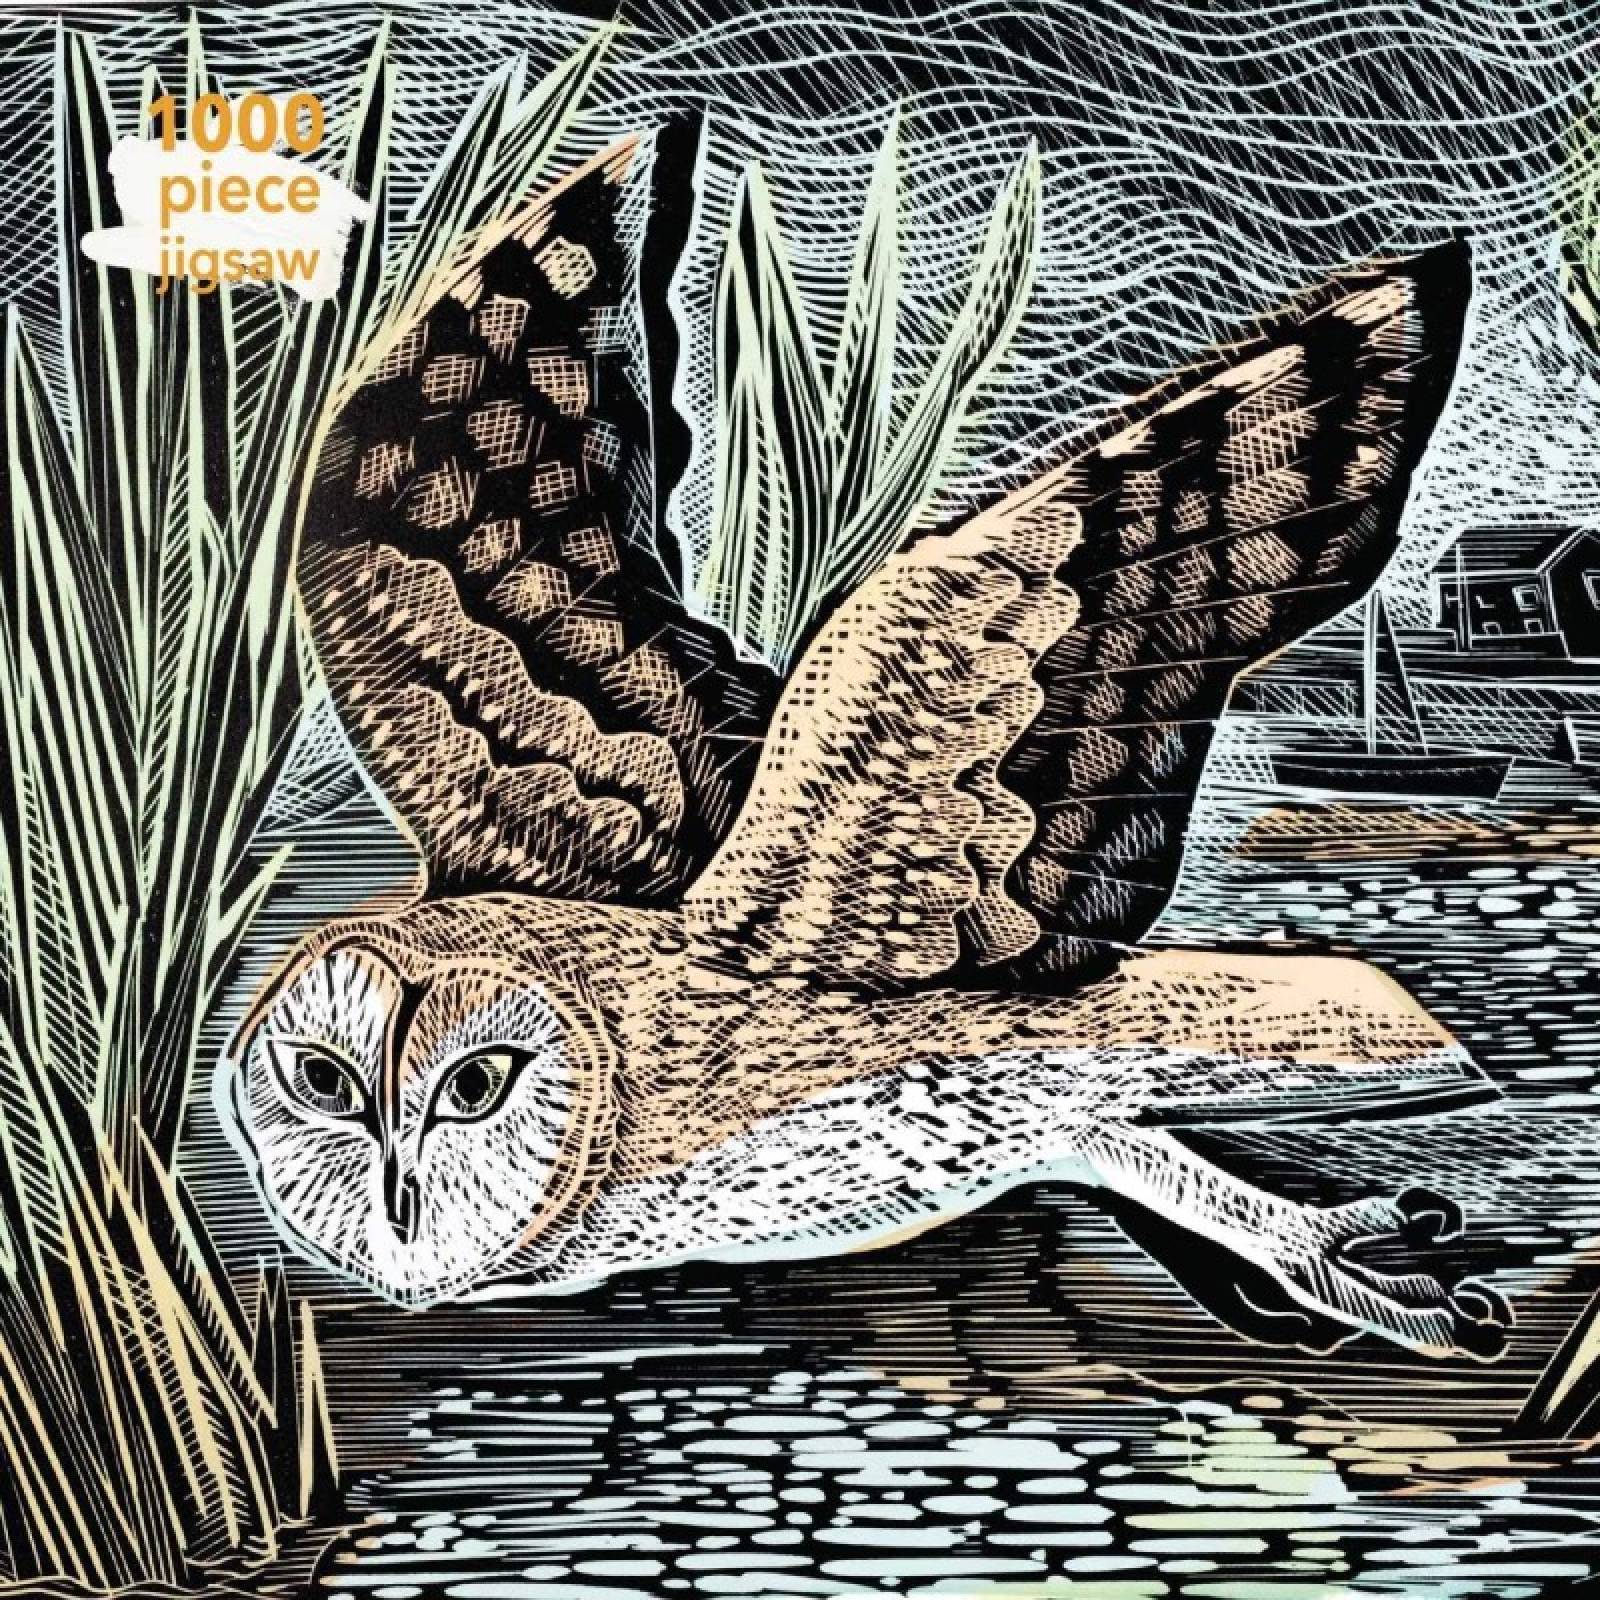 Marsh Owl By Angela Harding - 1000 Piece Jigsaw Puzzle